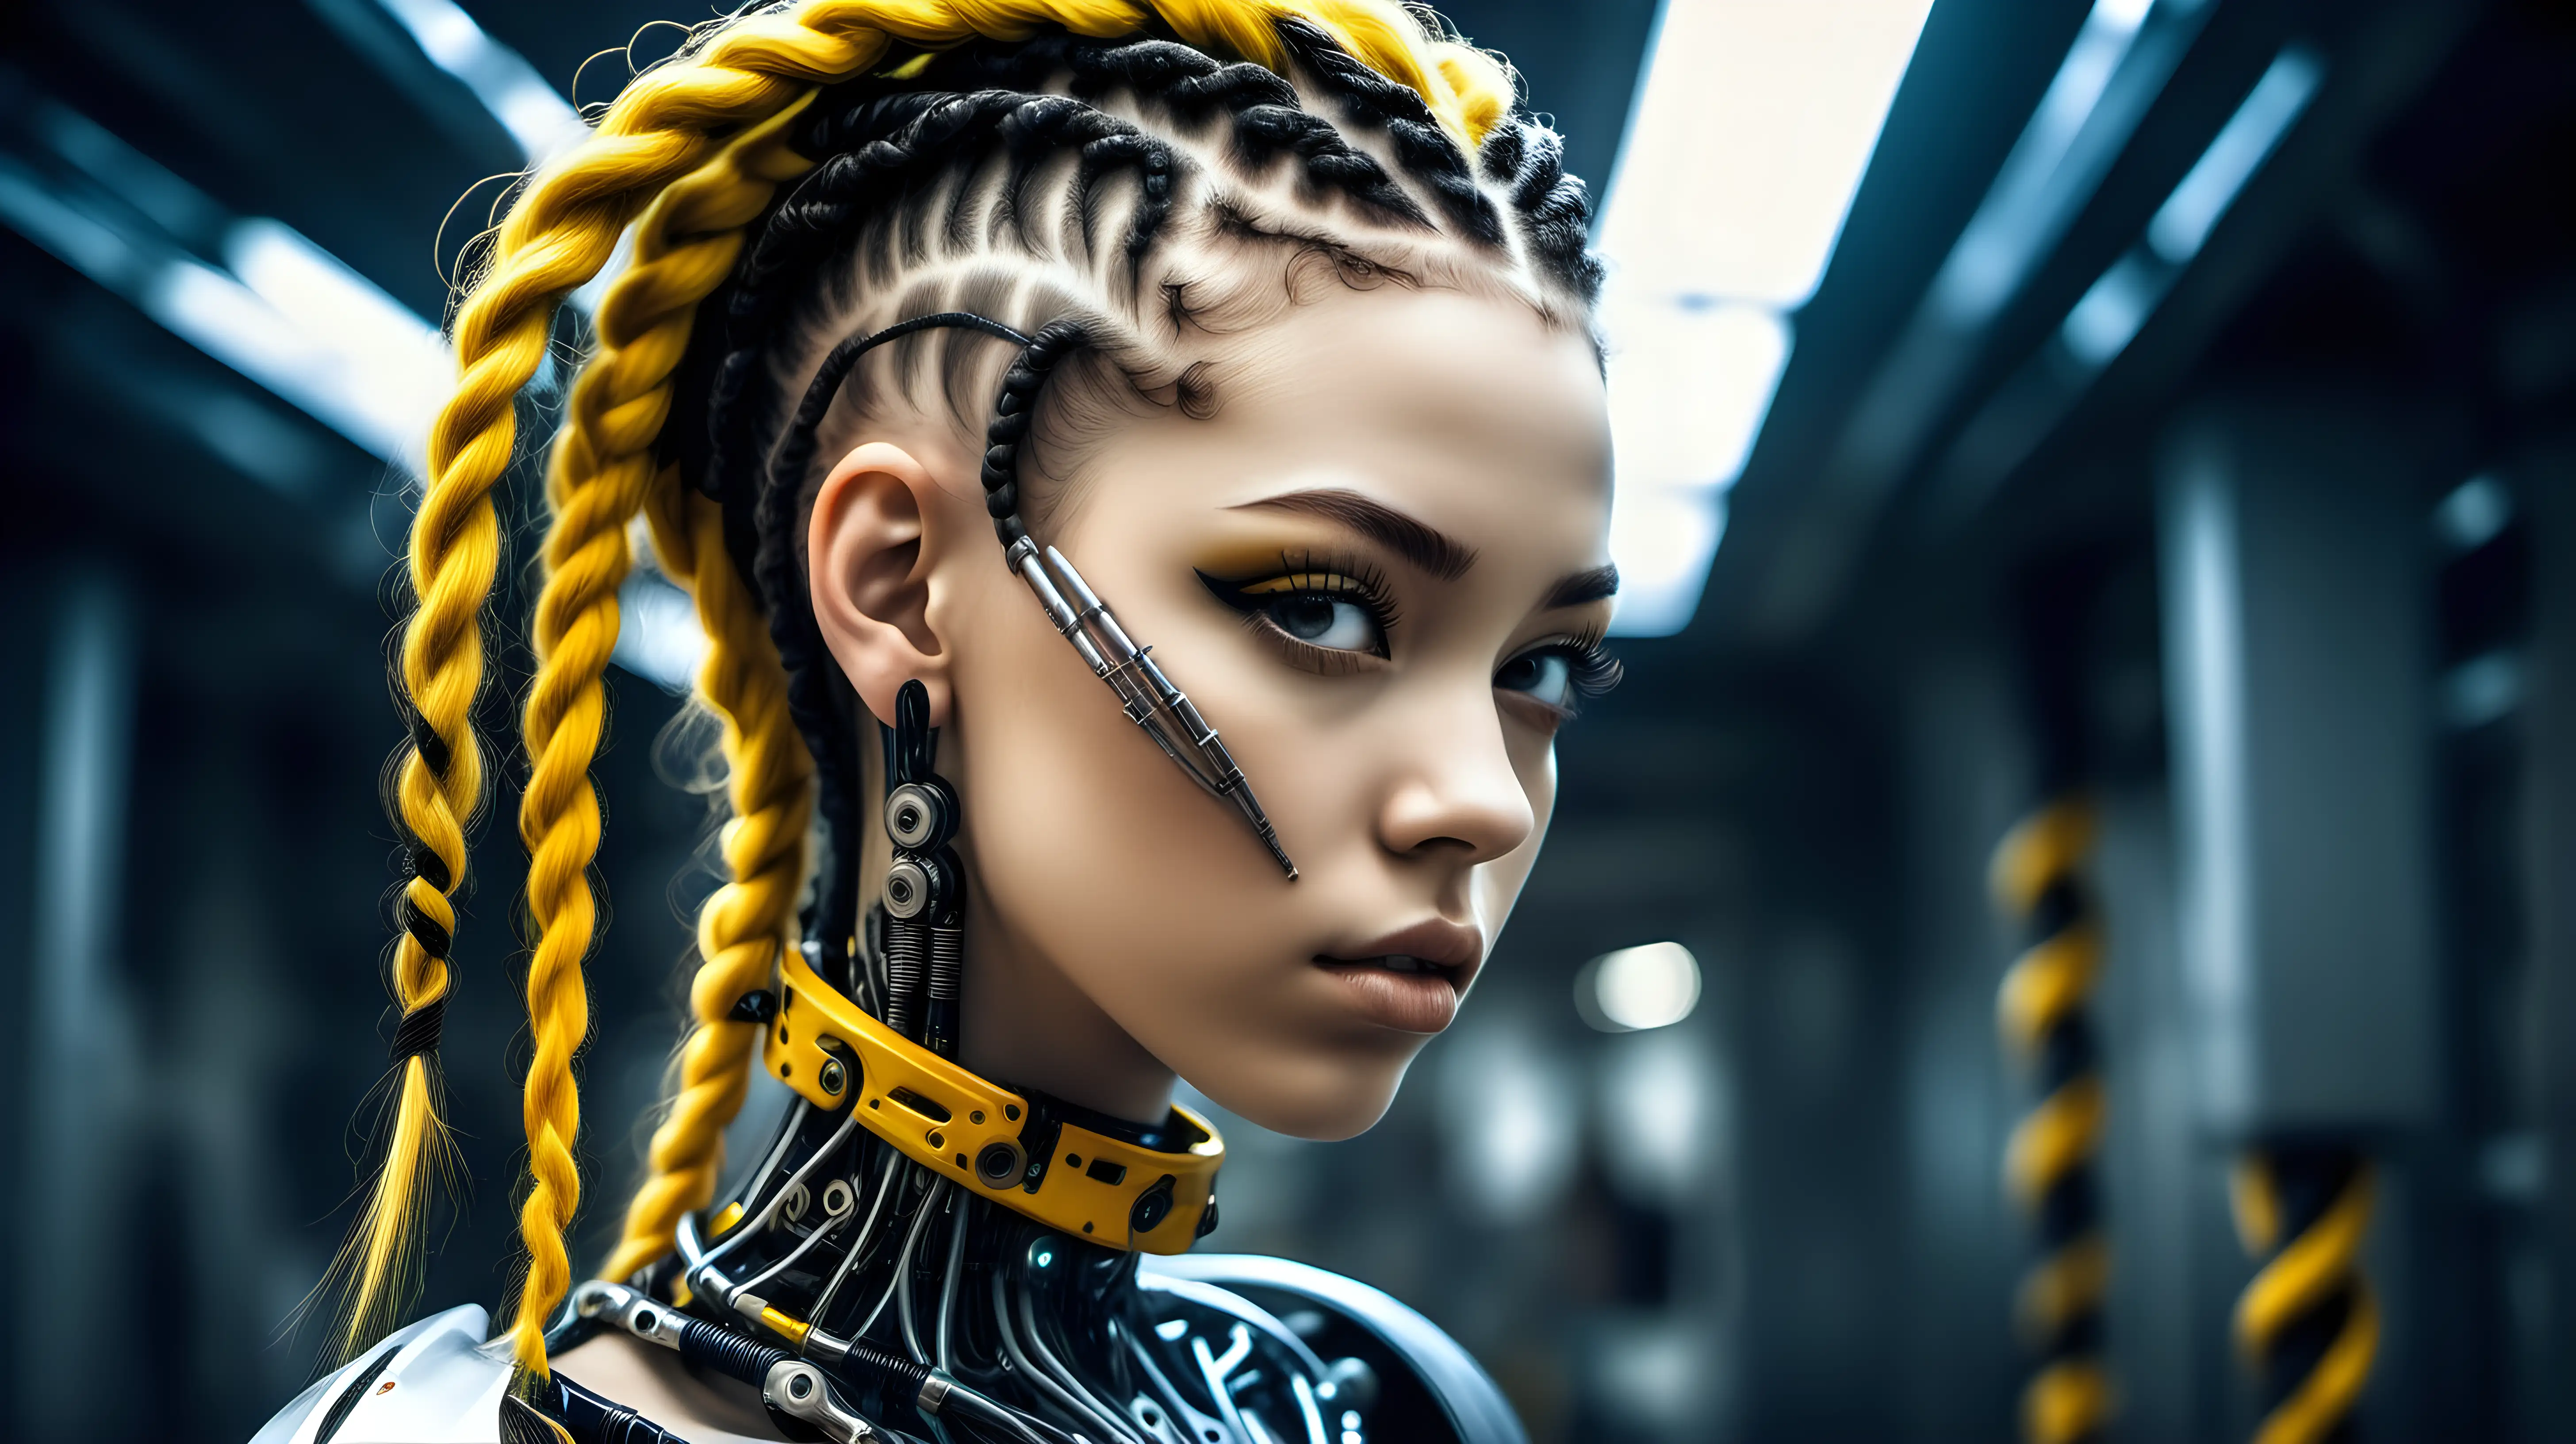 Gorgeous cyborg woman, 18 years old. She has a cyborg face, but she is extremely beautiful. Wild hair, futuristic braids. Yellow braids, black braids. Many braids. European cyborg woman, white woman.